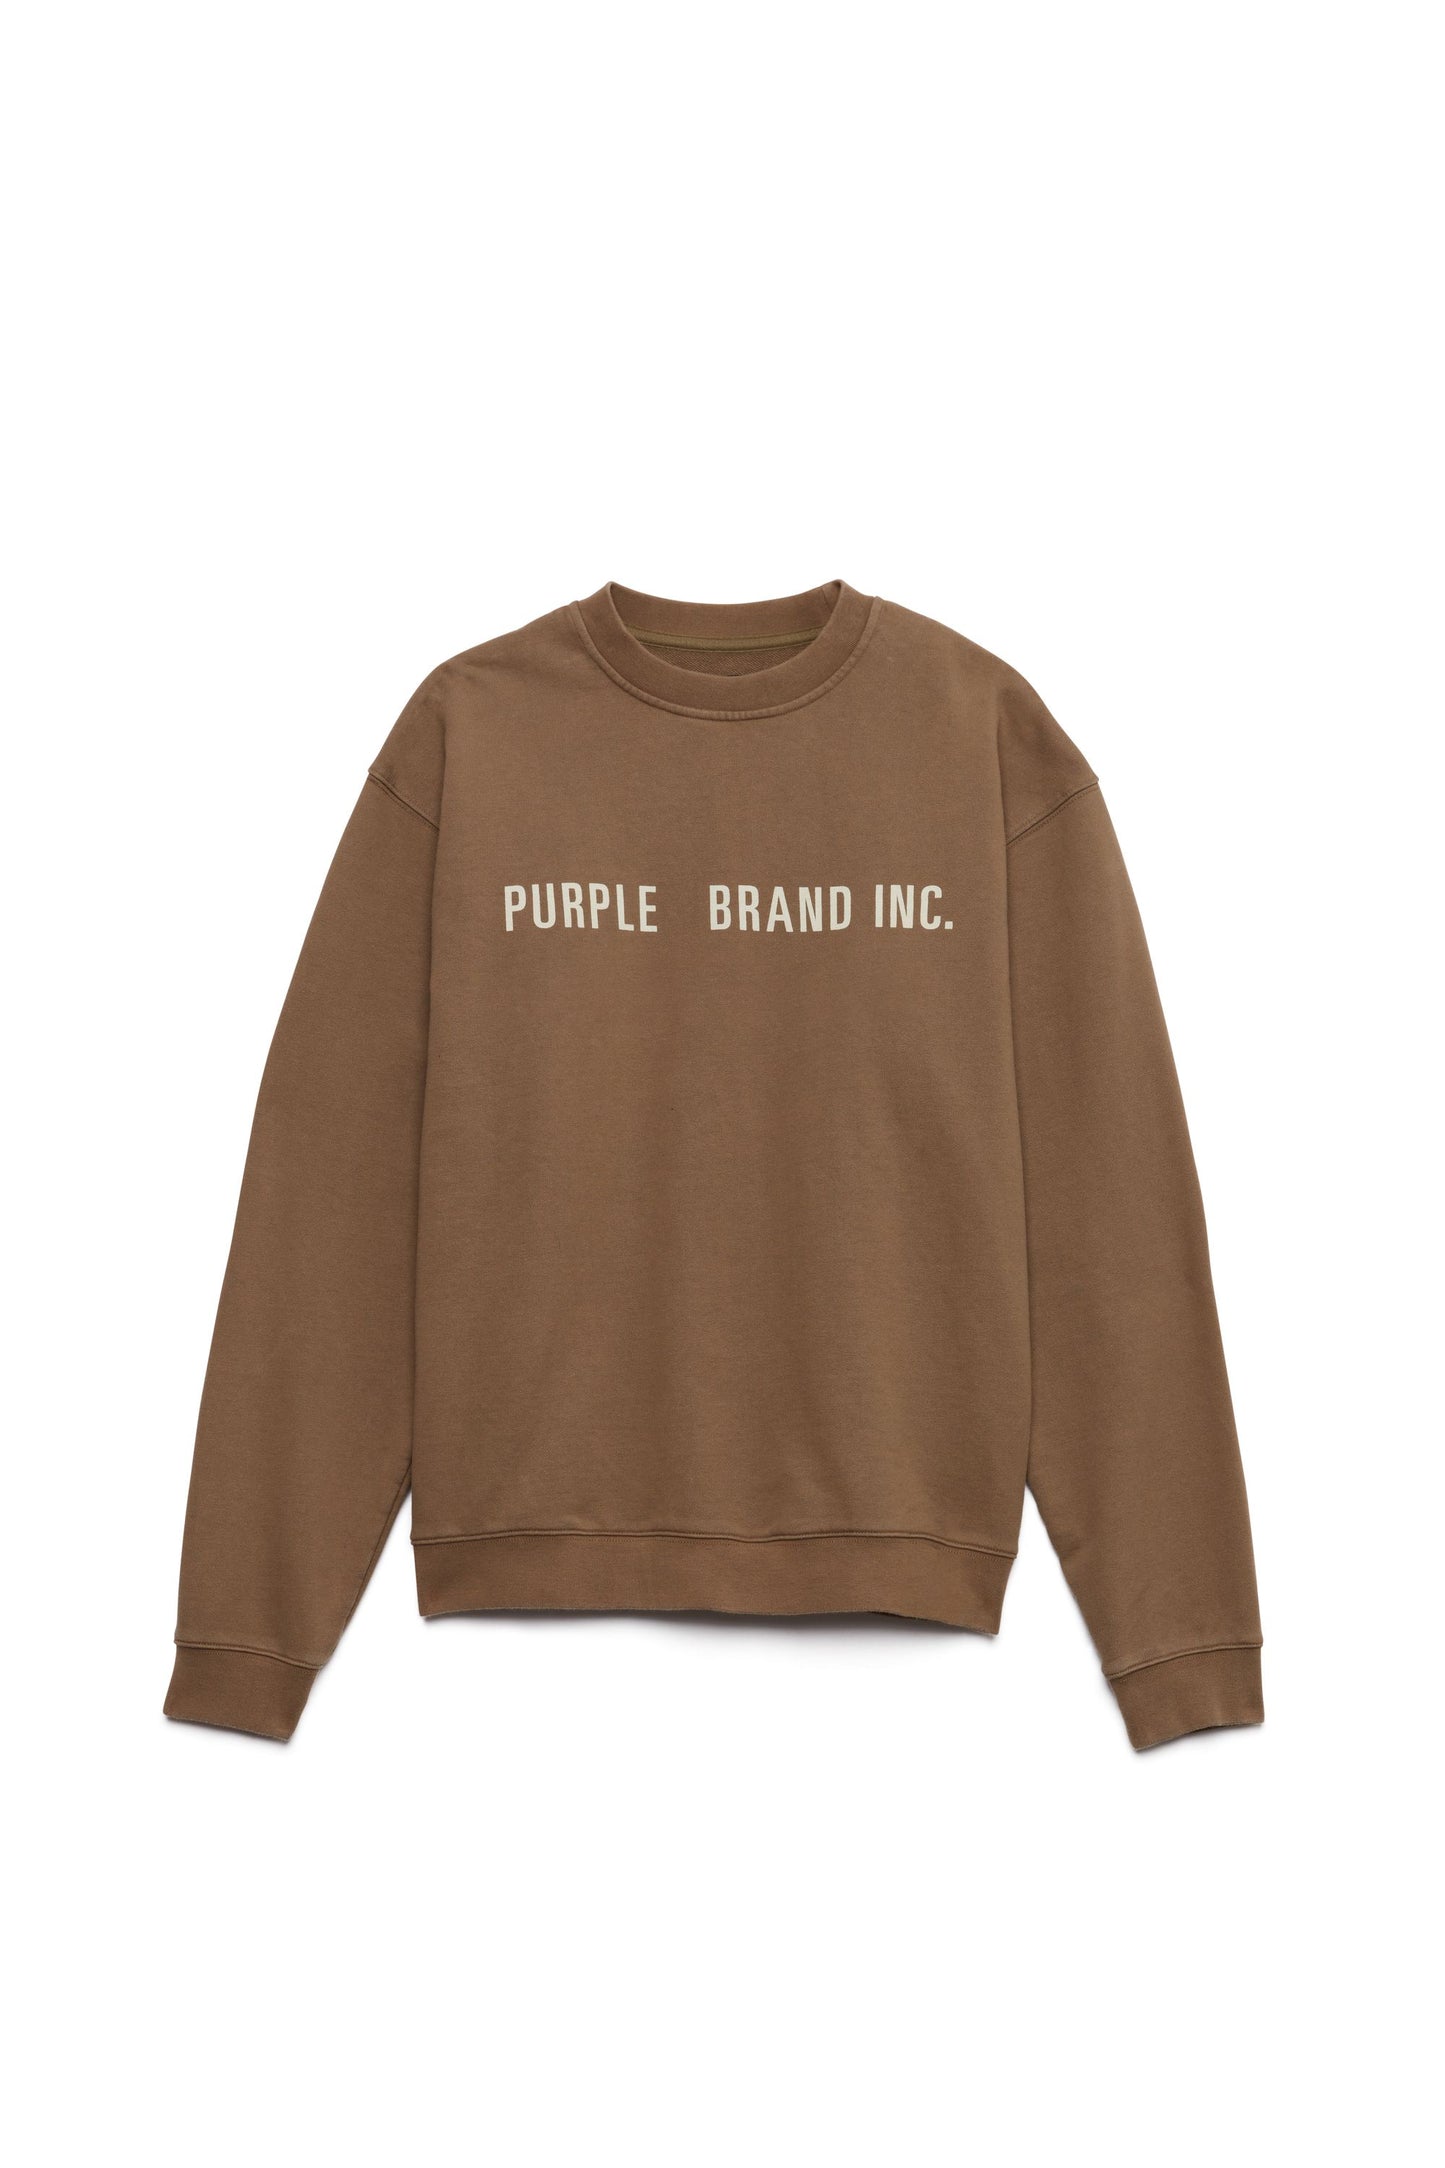 PURPLE BRAND - Crew Sweatshirt - Style No. P405 - Artifact Crew Earth - Front